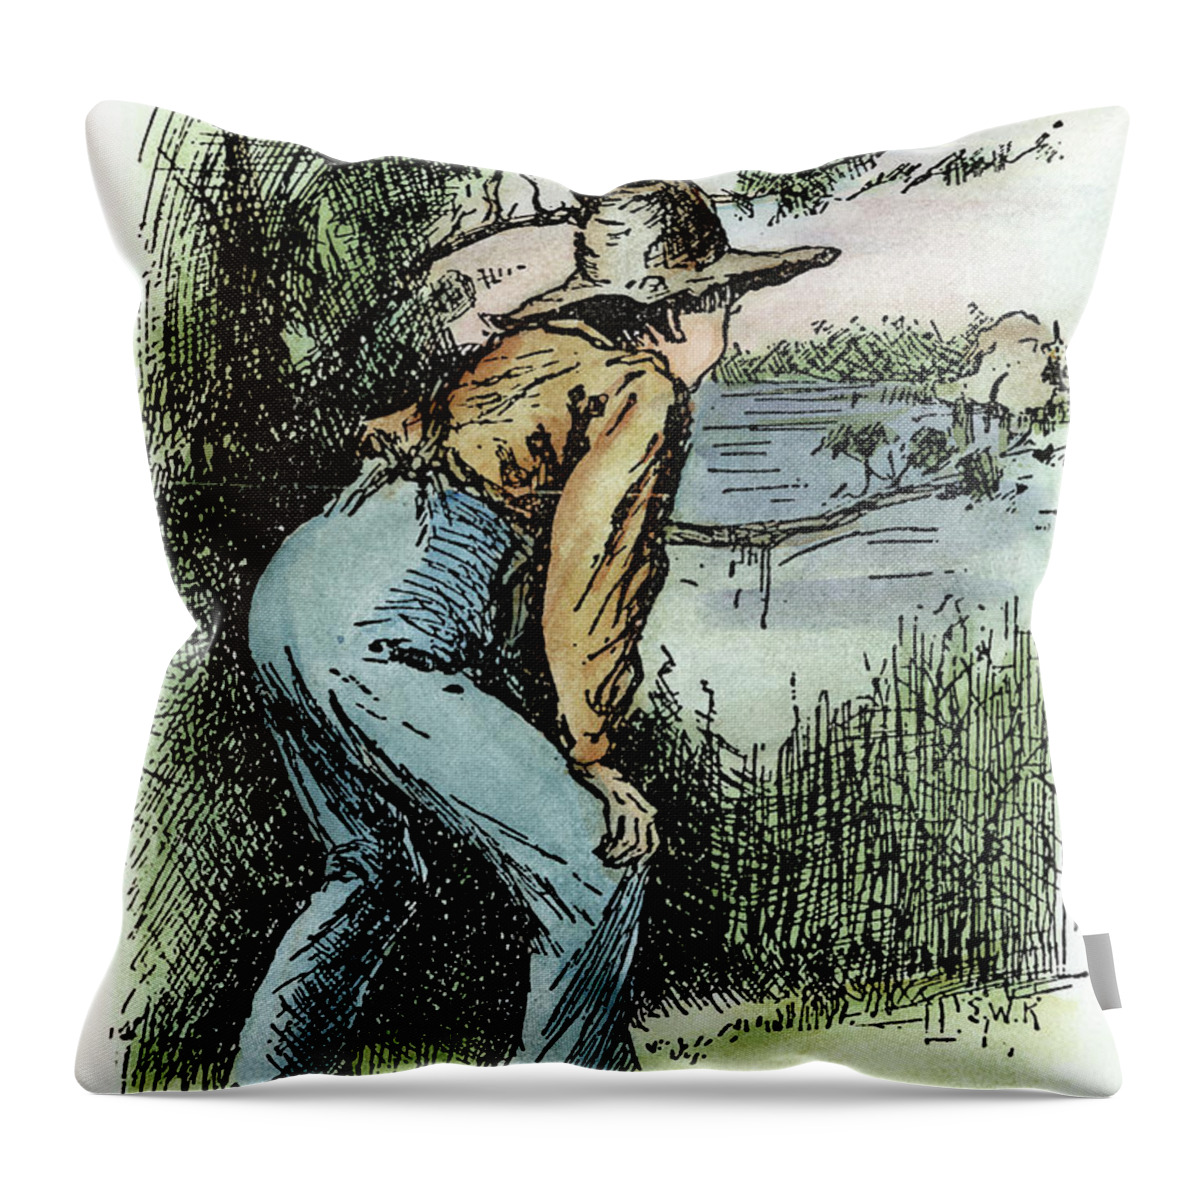 1885 Throw Pillow featuring the drawing Clemens Huck Finn, 1885 #4 by Granger